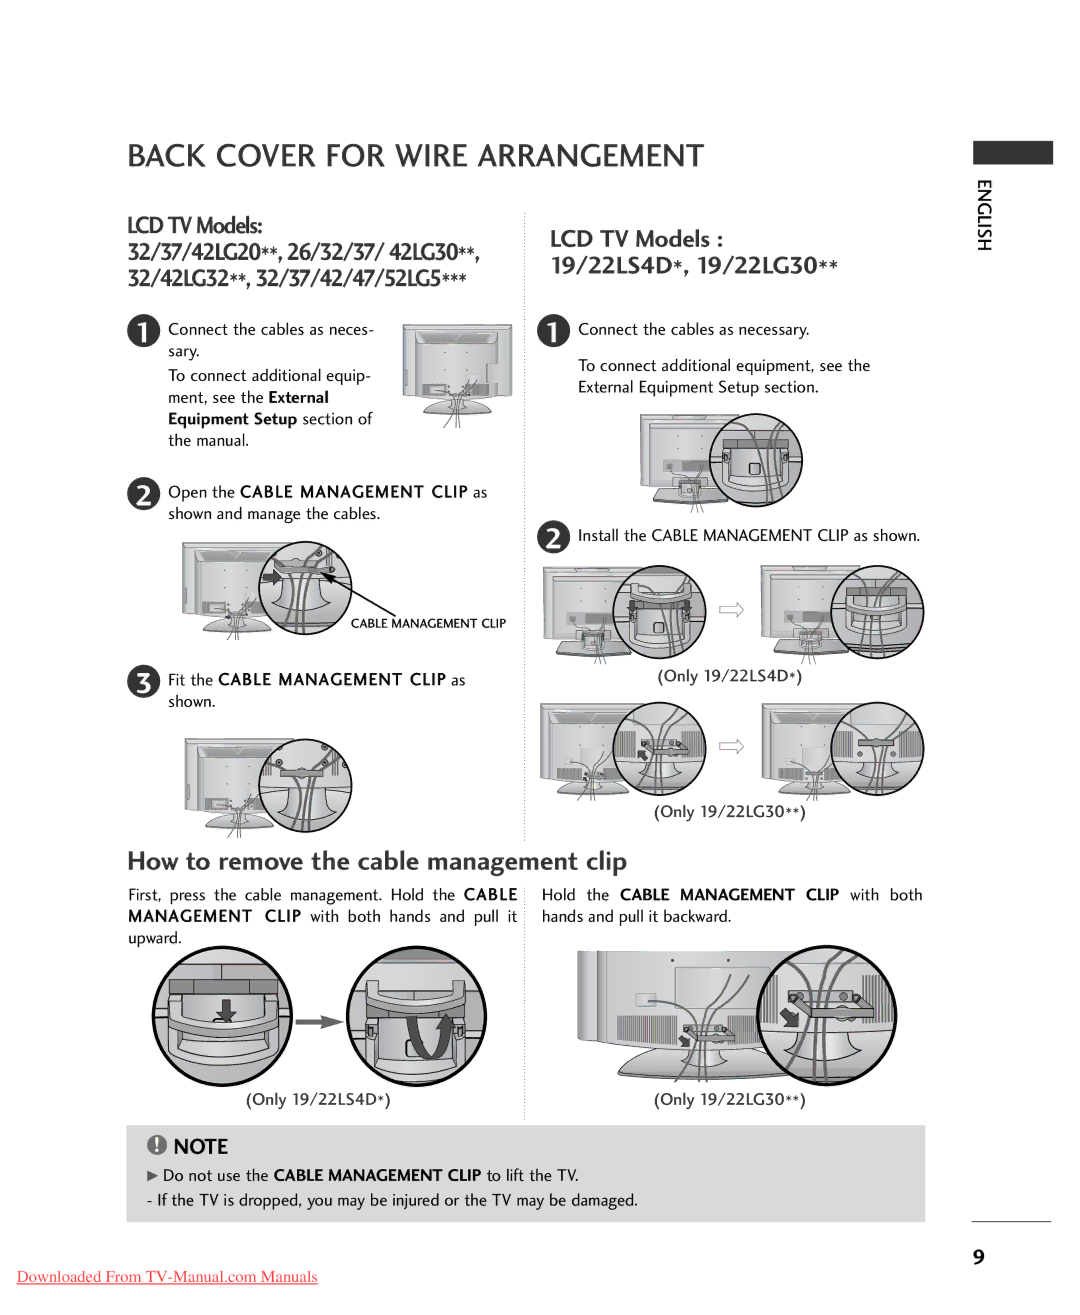 LG Electronics 32LG50* owner manual Back Cover for Wire Arrangement, LCD TV Models 